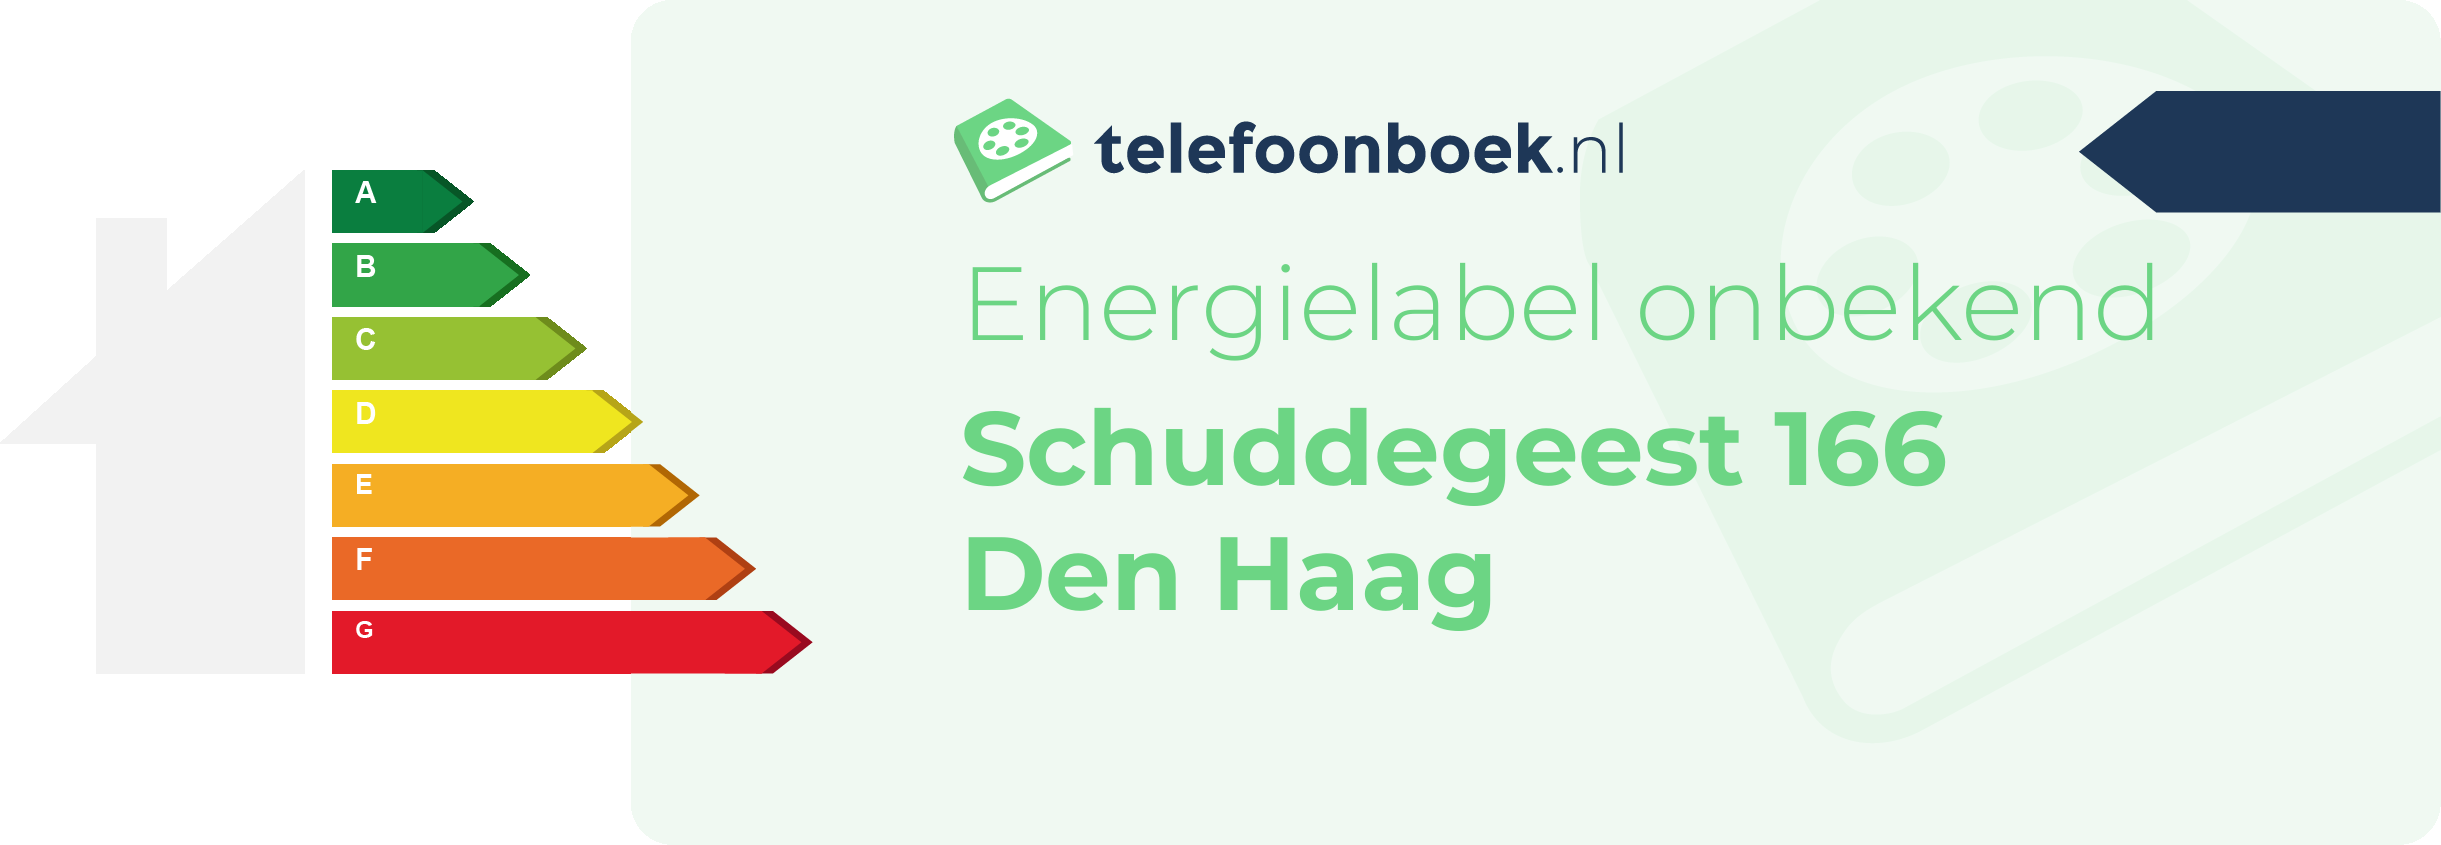 Energielabel Schuddegeest 166 Den Haag